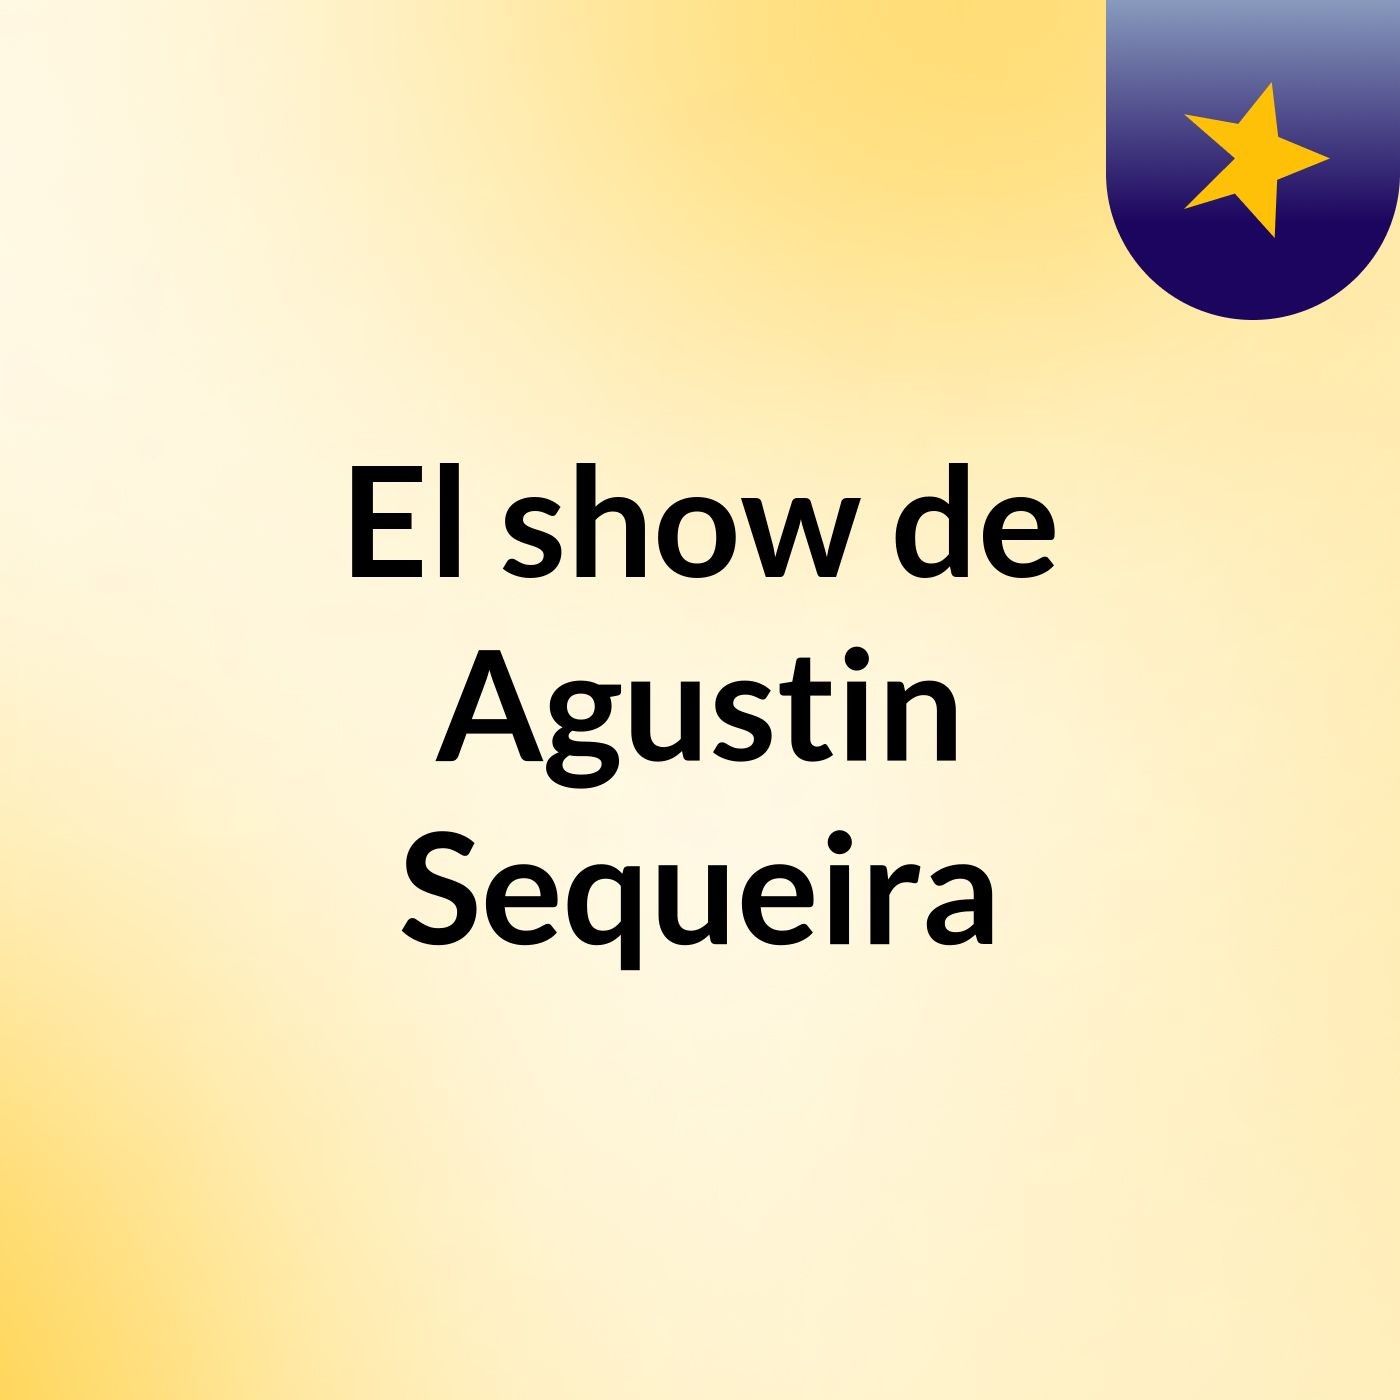 El show de Agustin Sequeira